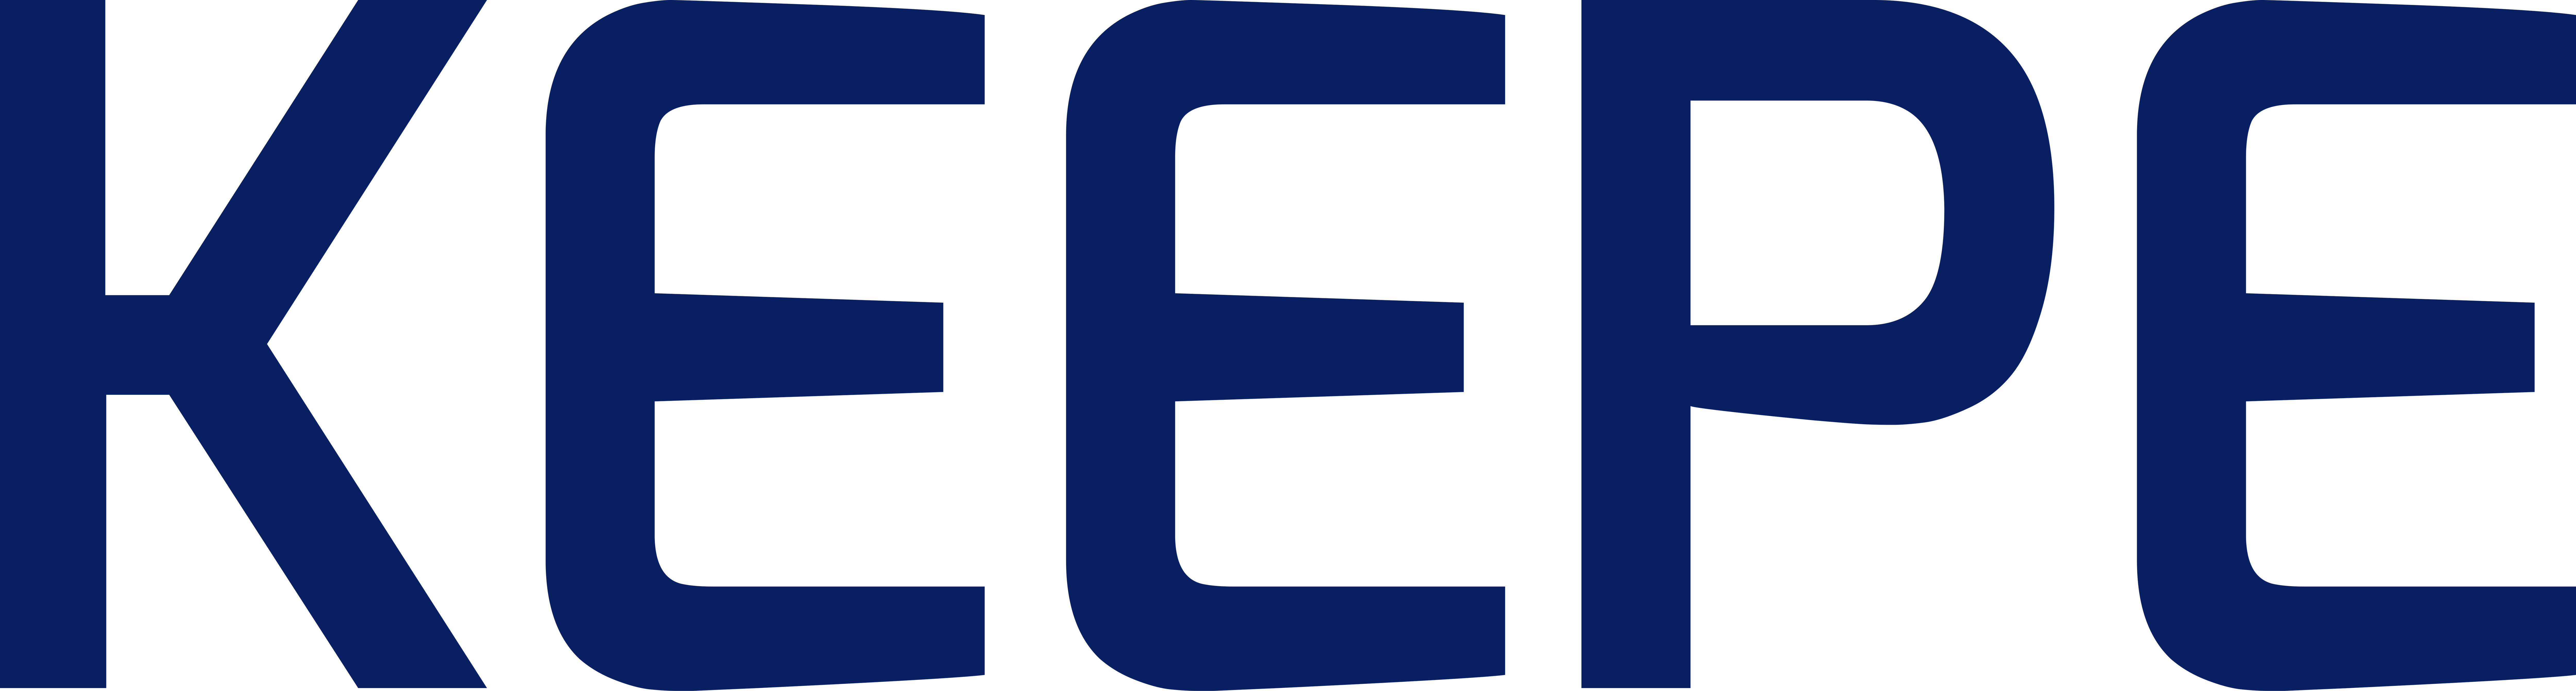 keepe-logo.png